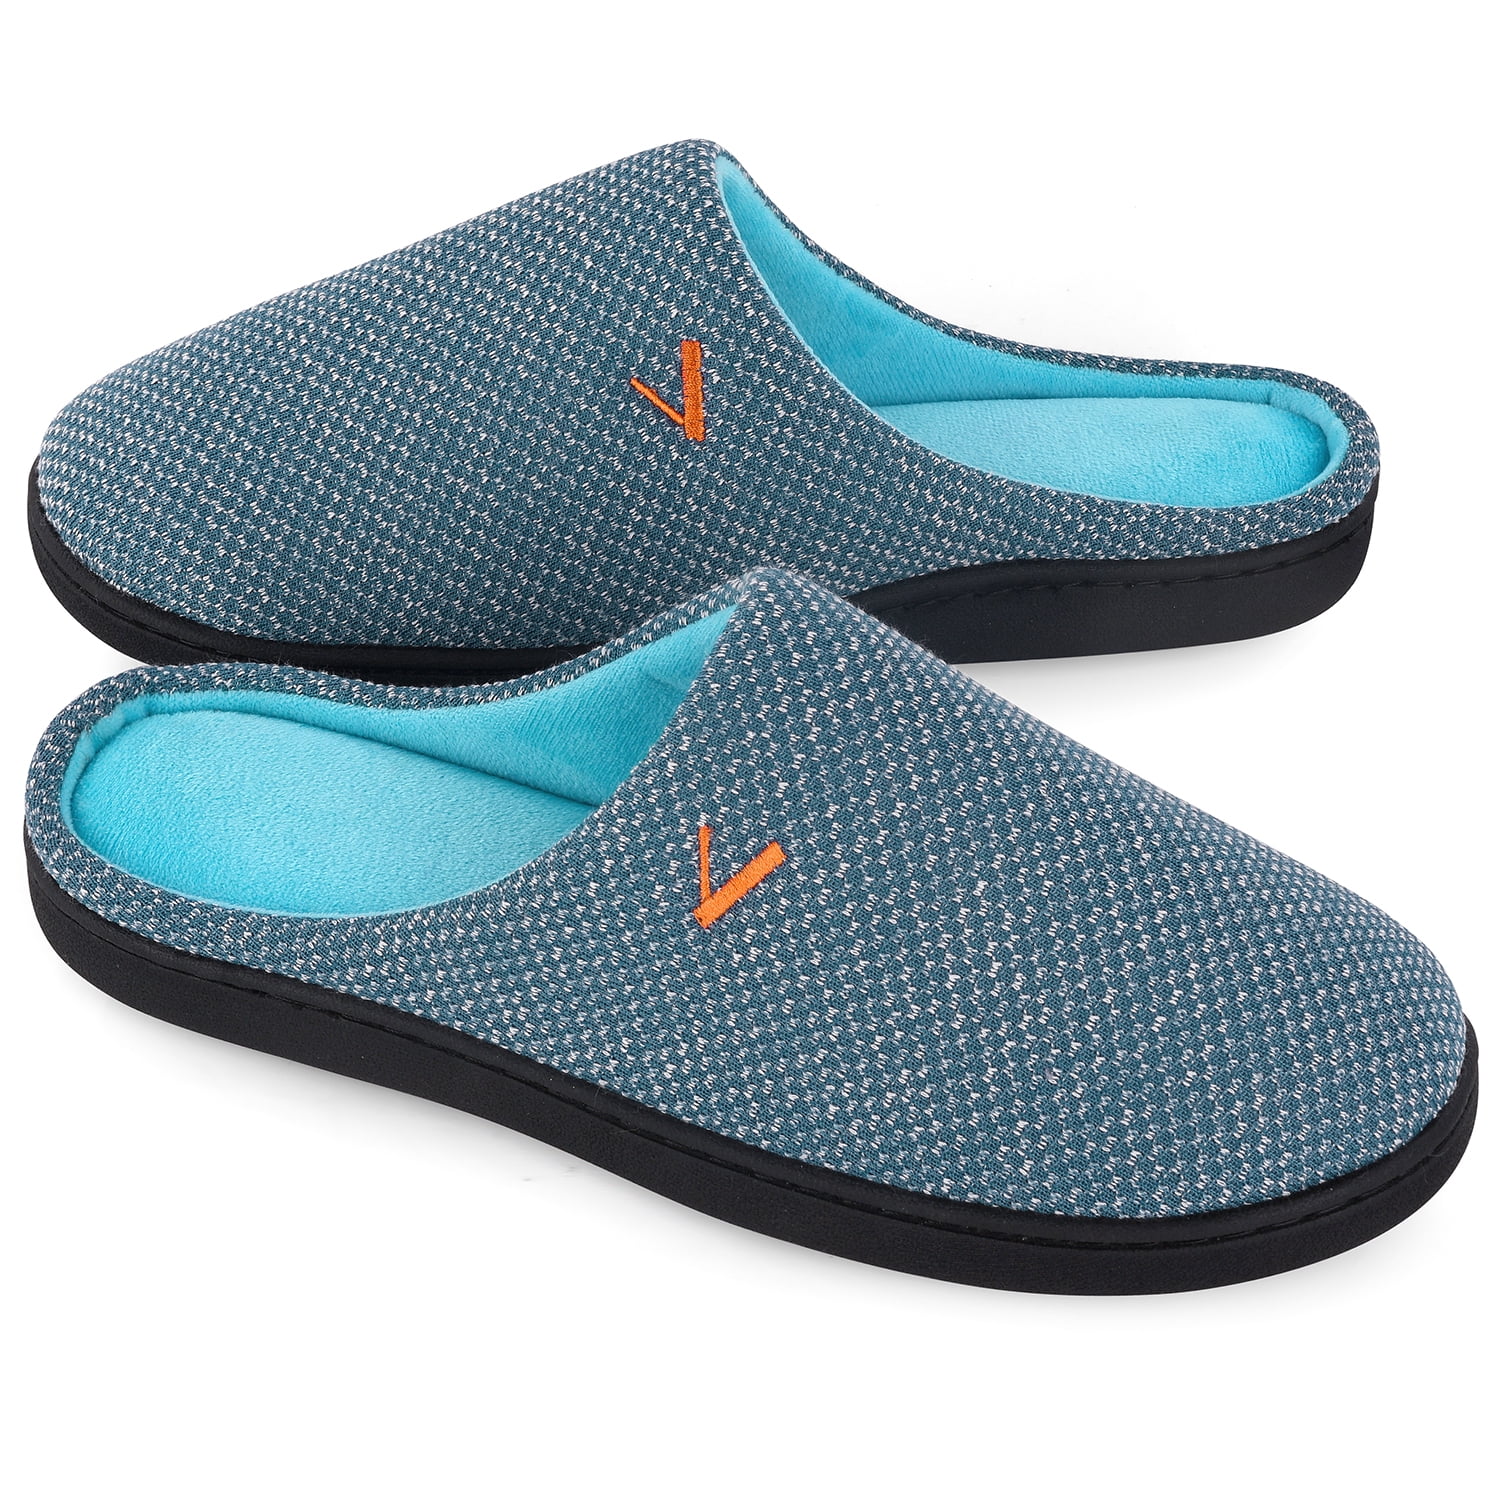 VONMAY Men's Cozy Slippers Two-Tone Indoor Outdoor House Shoes ...